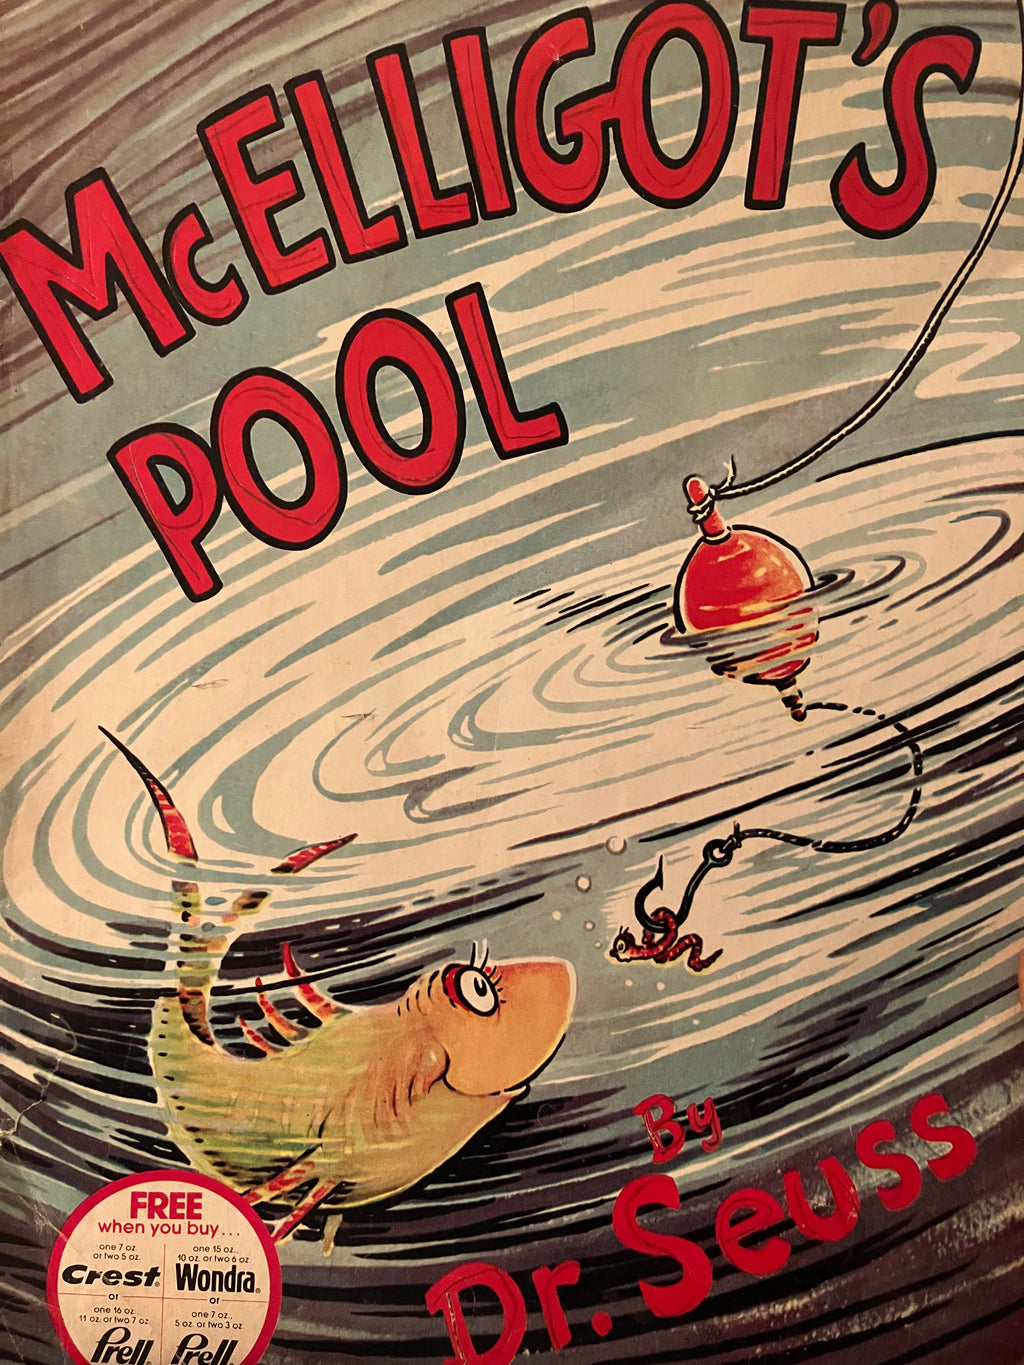 McElligots Pool Book